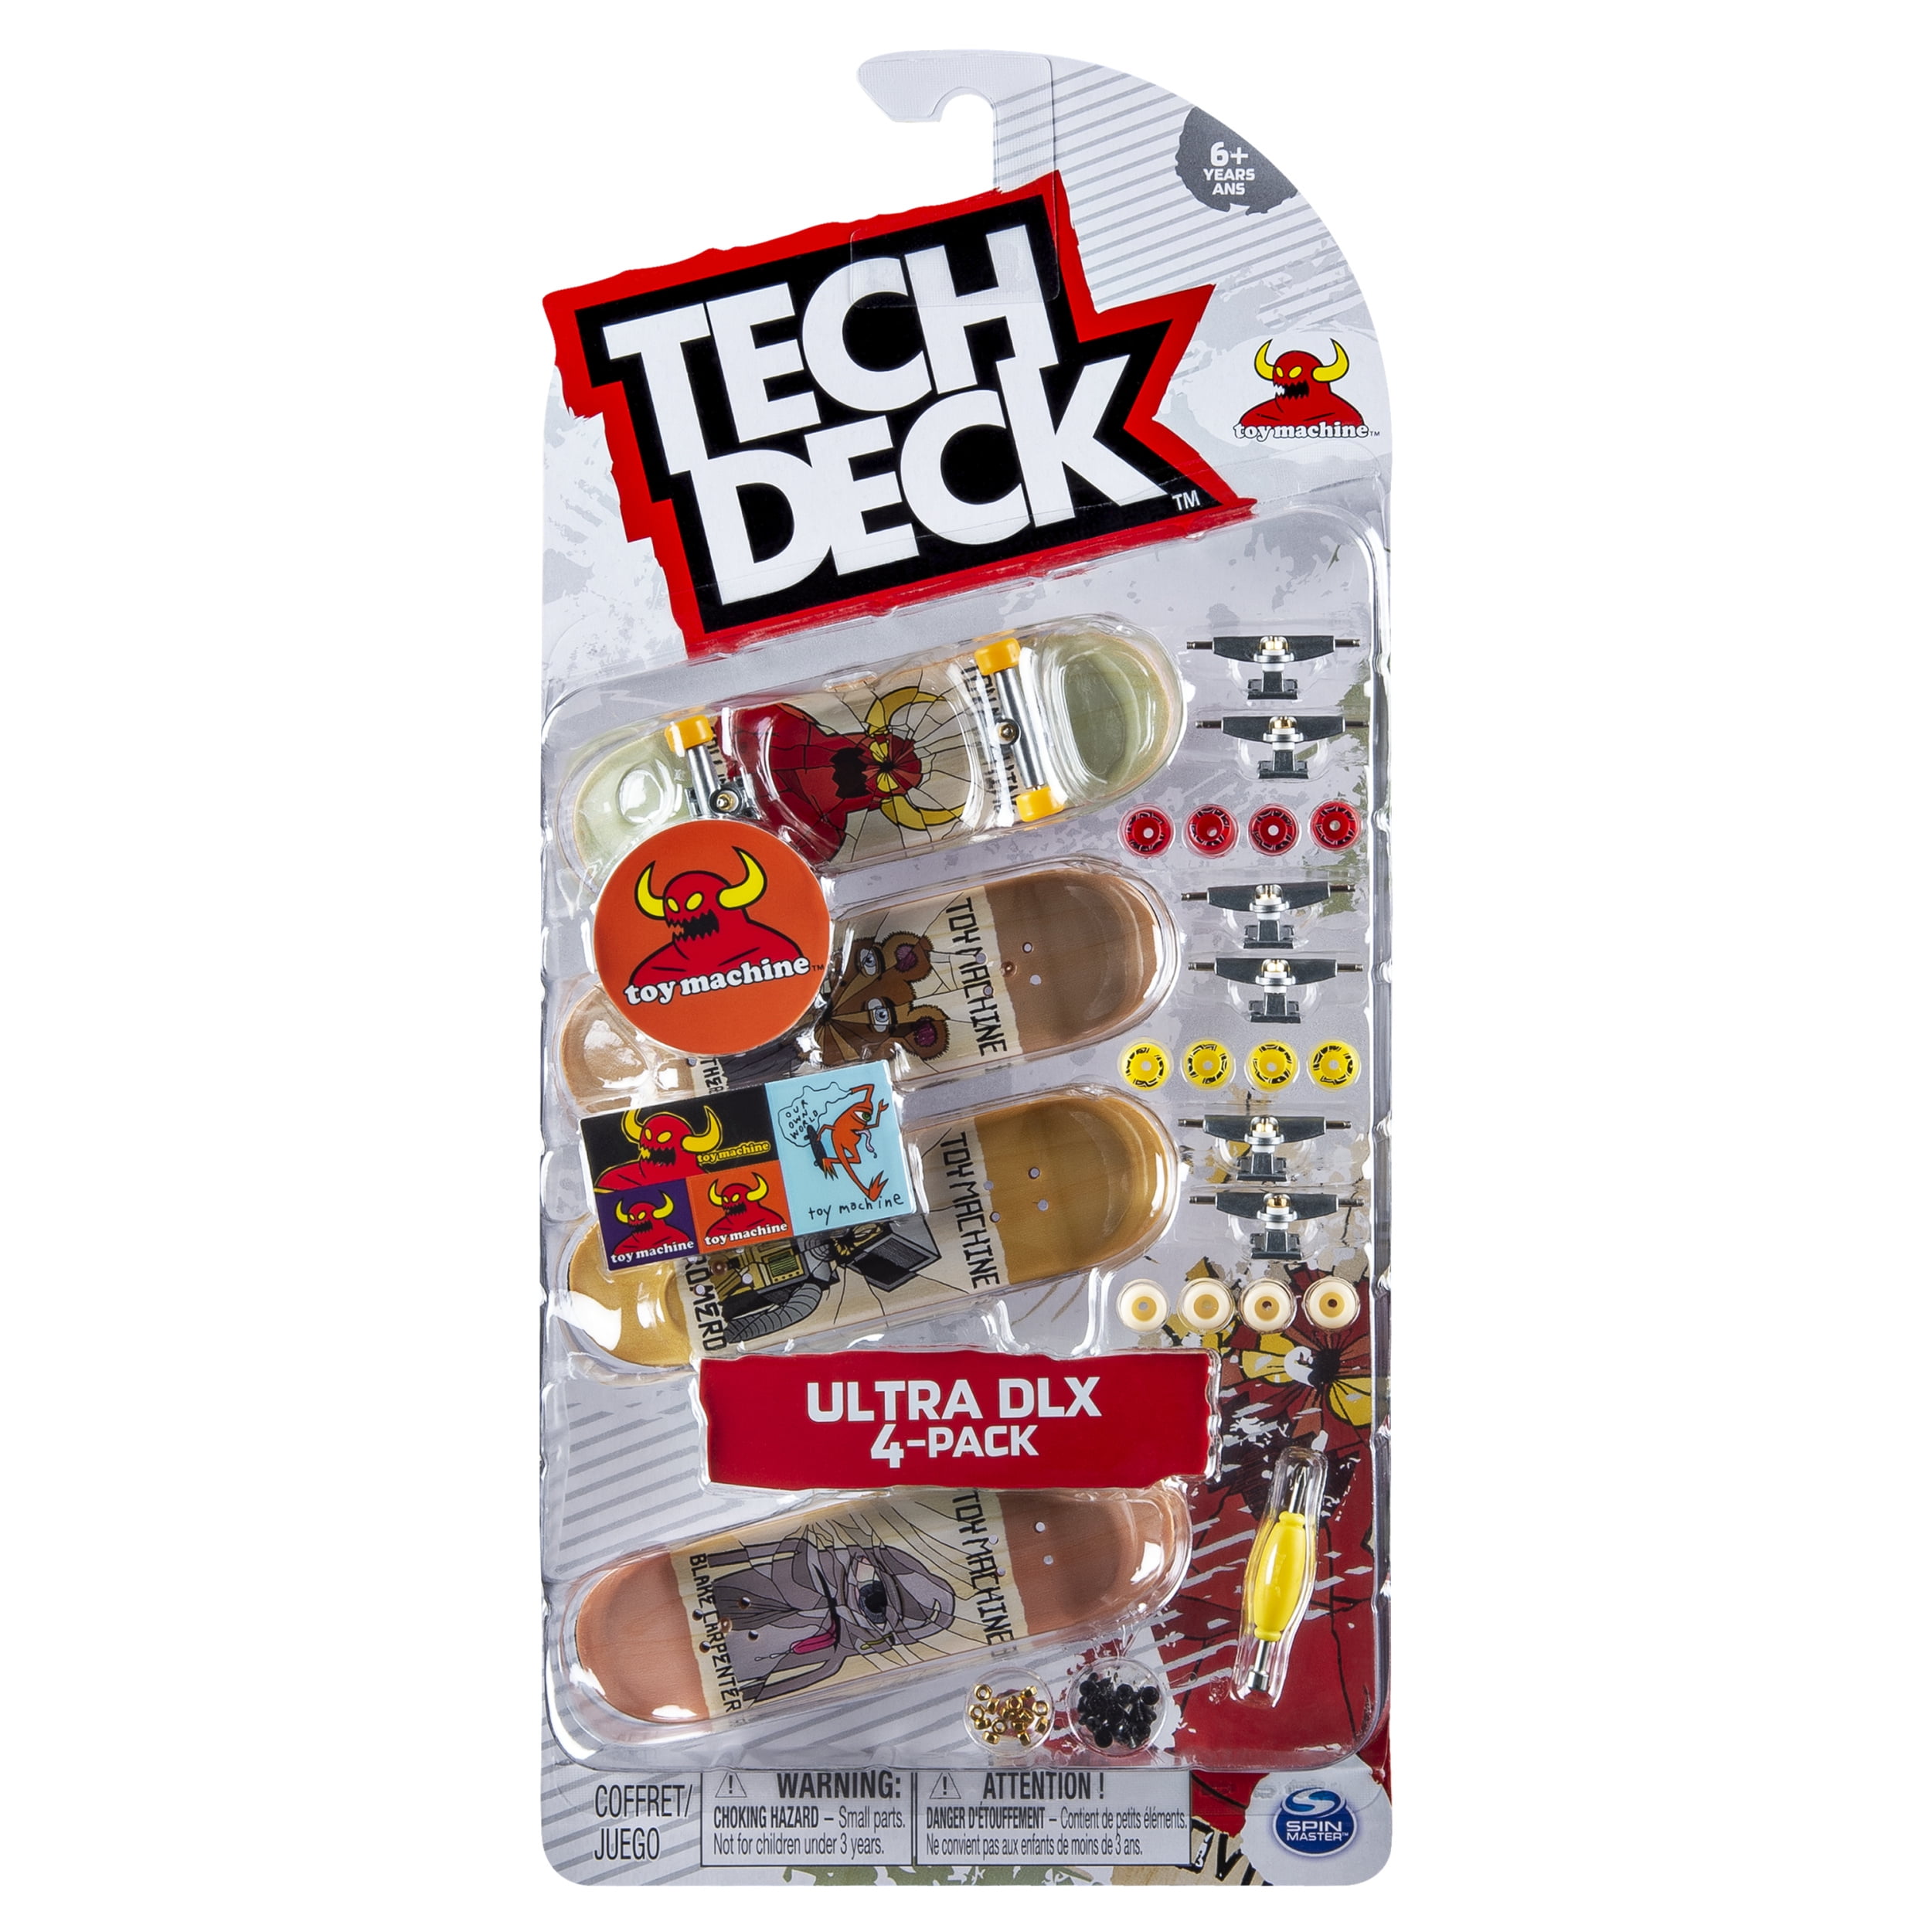 Tech Deck 96mm Fingerboard – Child's Play